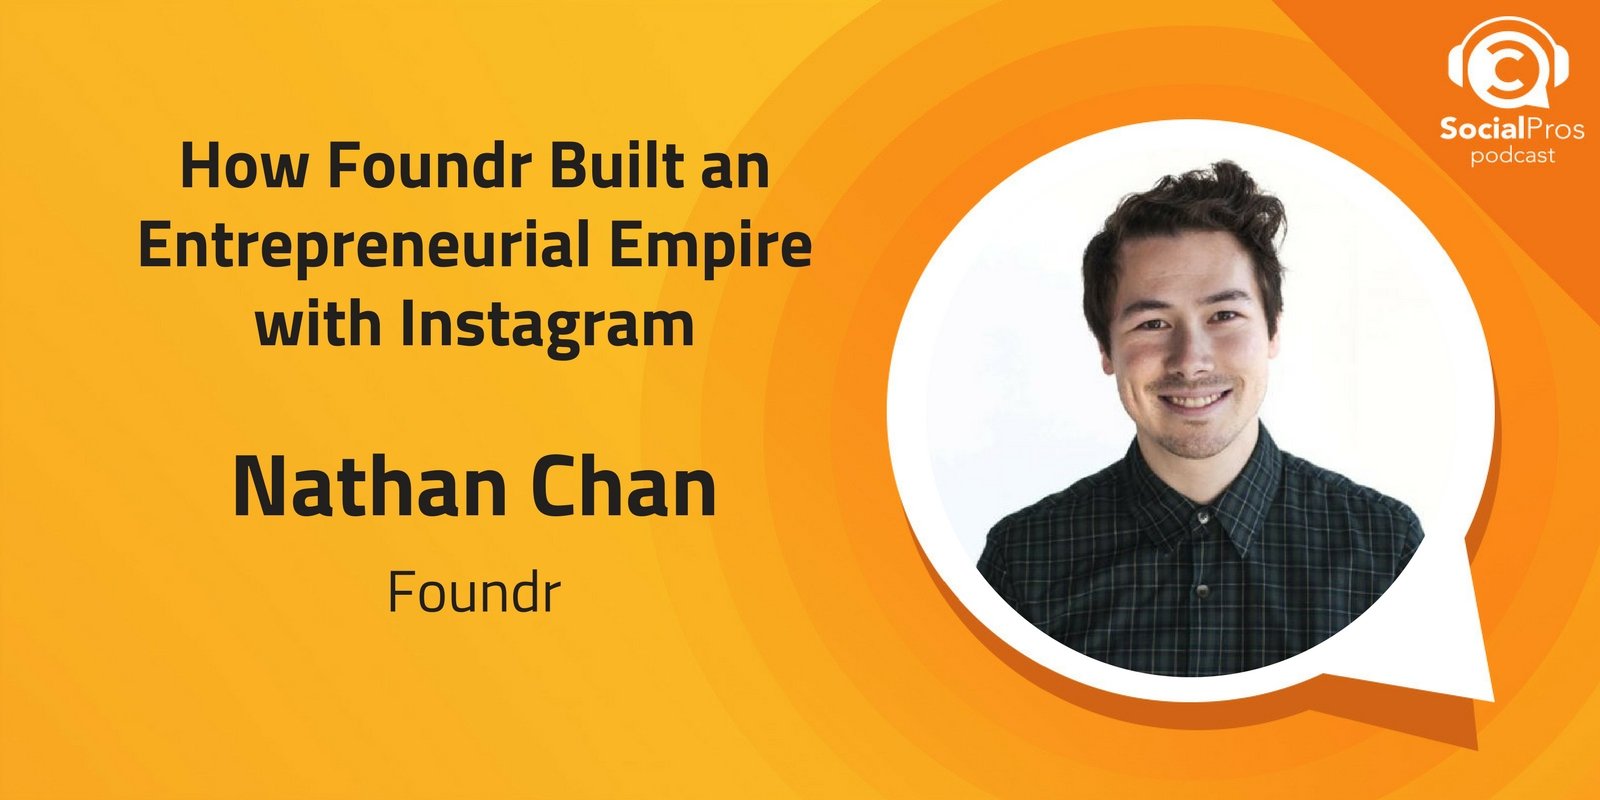 How Foundr Built an Entrepreneurial Empire with Instagram